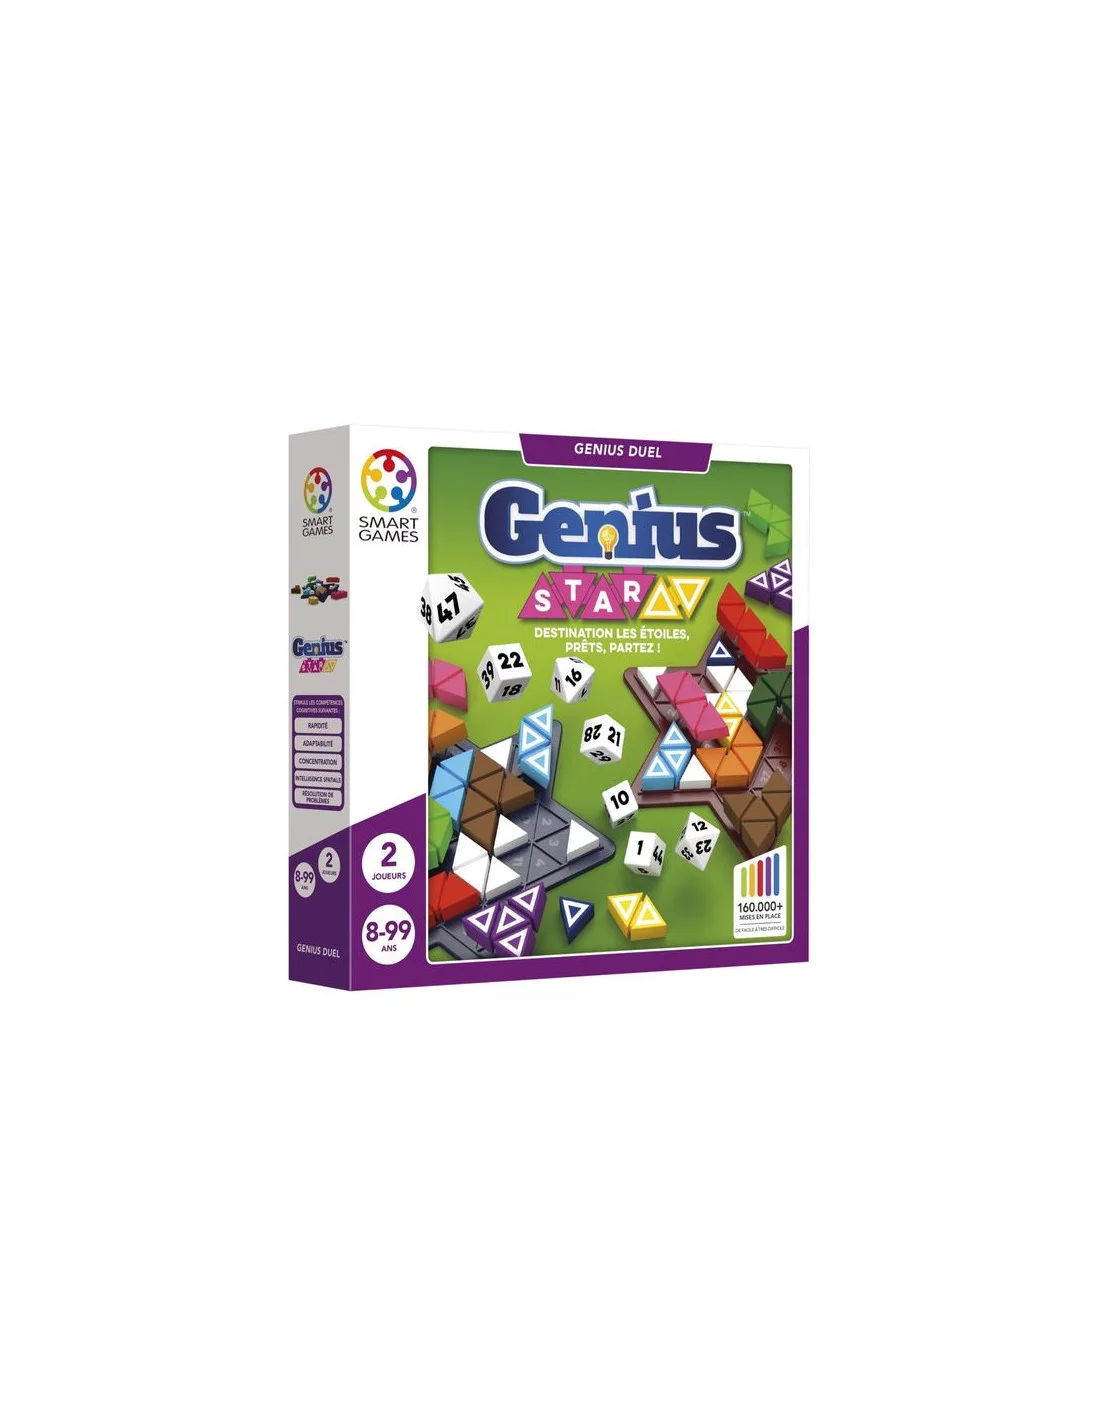 Smart Games – Genius Star